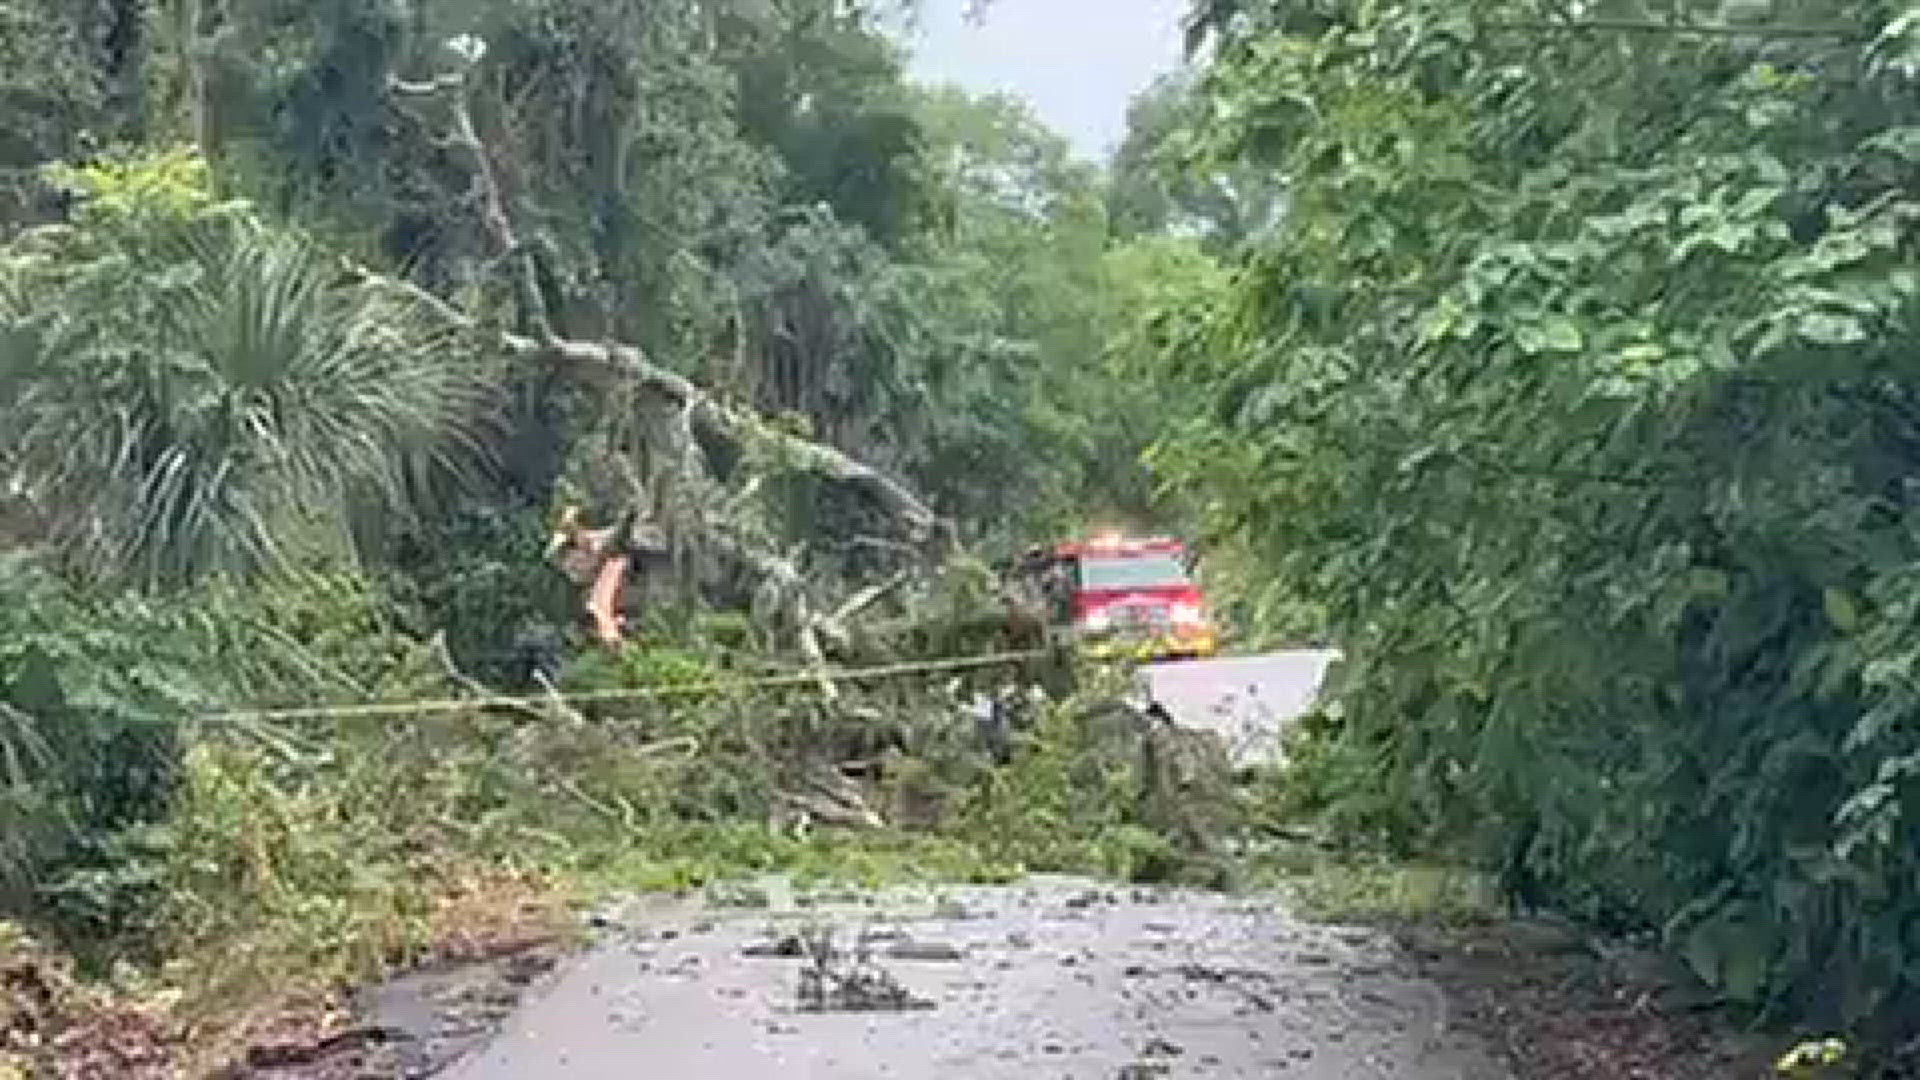 Water Street in Jacksonville blocked by fallen tree Friday.
Credit: Renata Di Gregorio